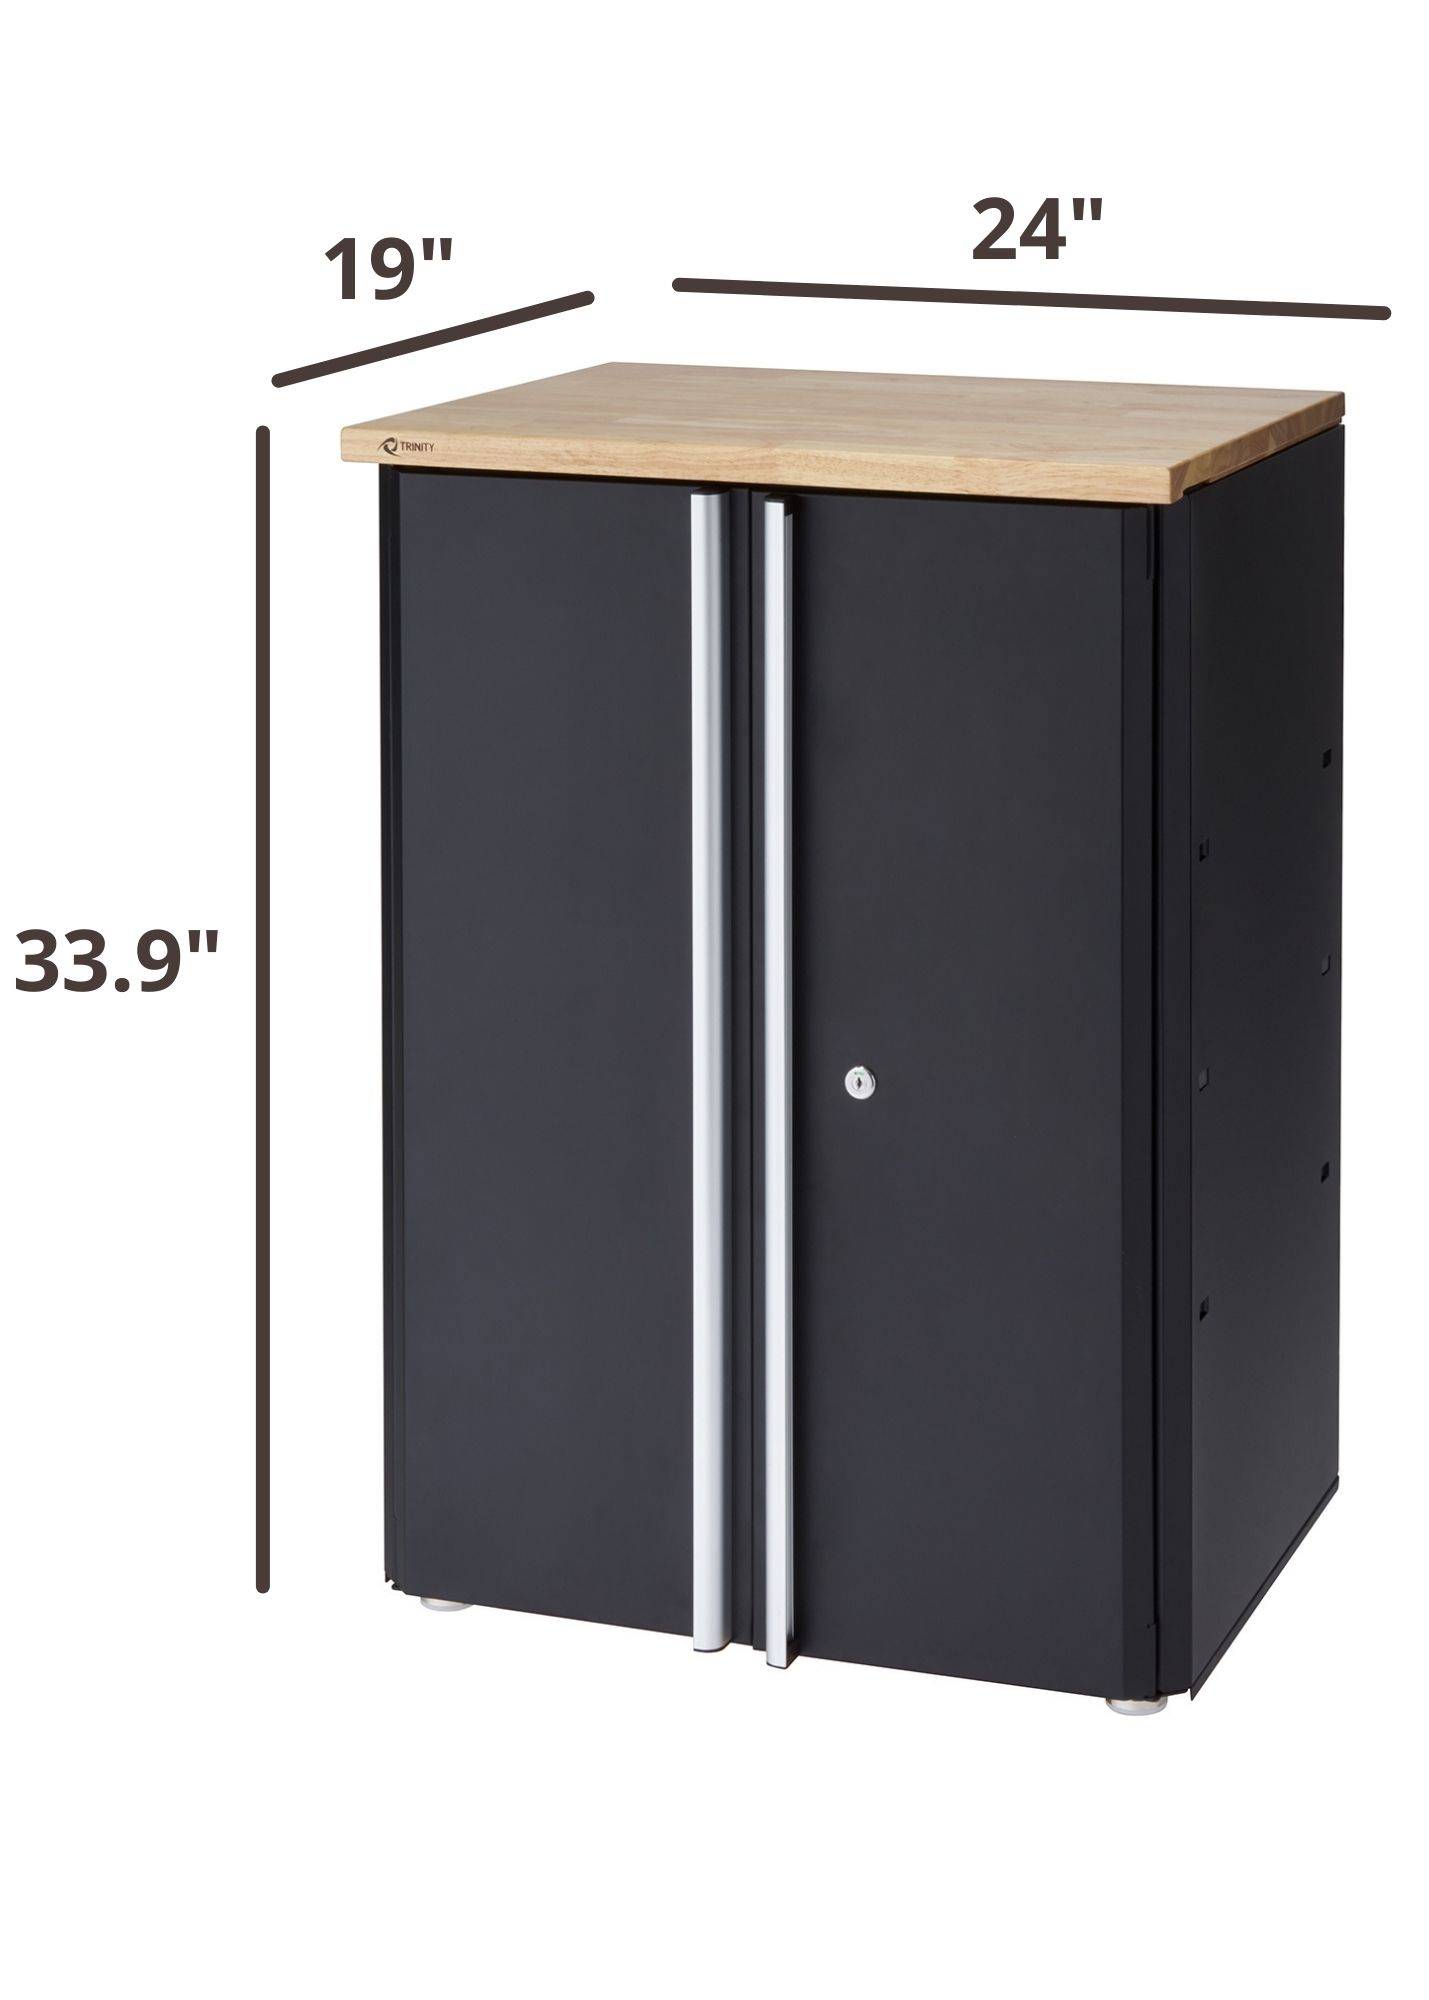 24 inches wide garage cabinet